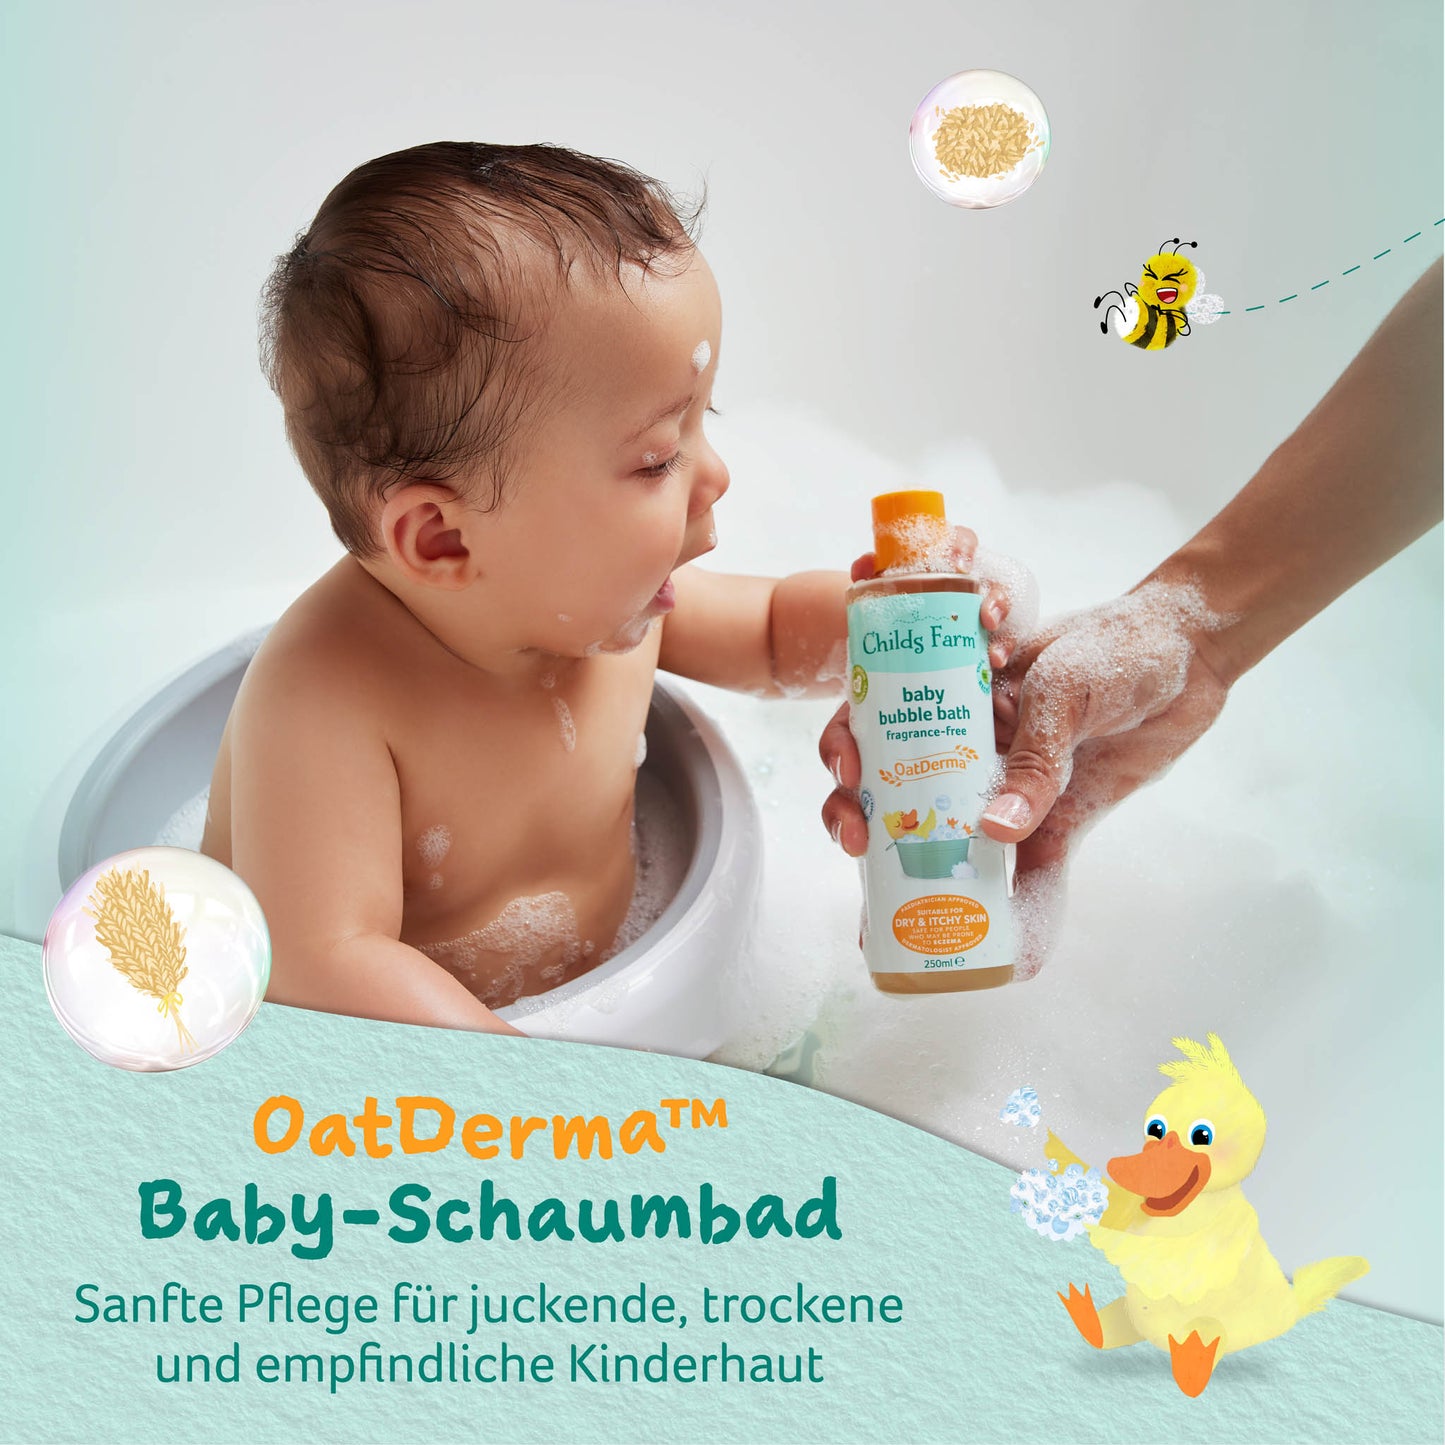 Childs Farm OatDerma™ baby bubble bath fragrance-free